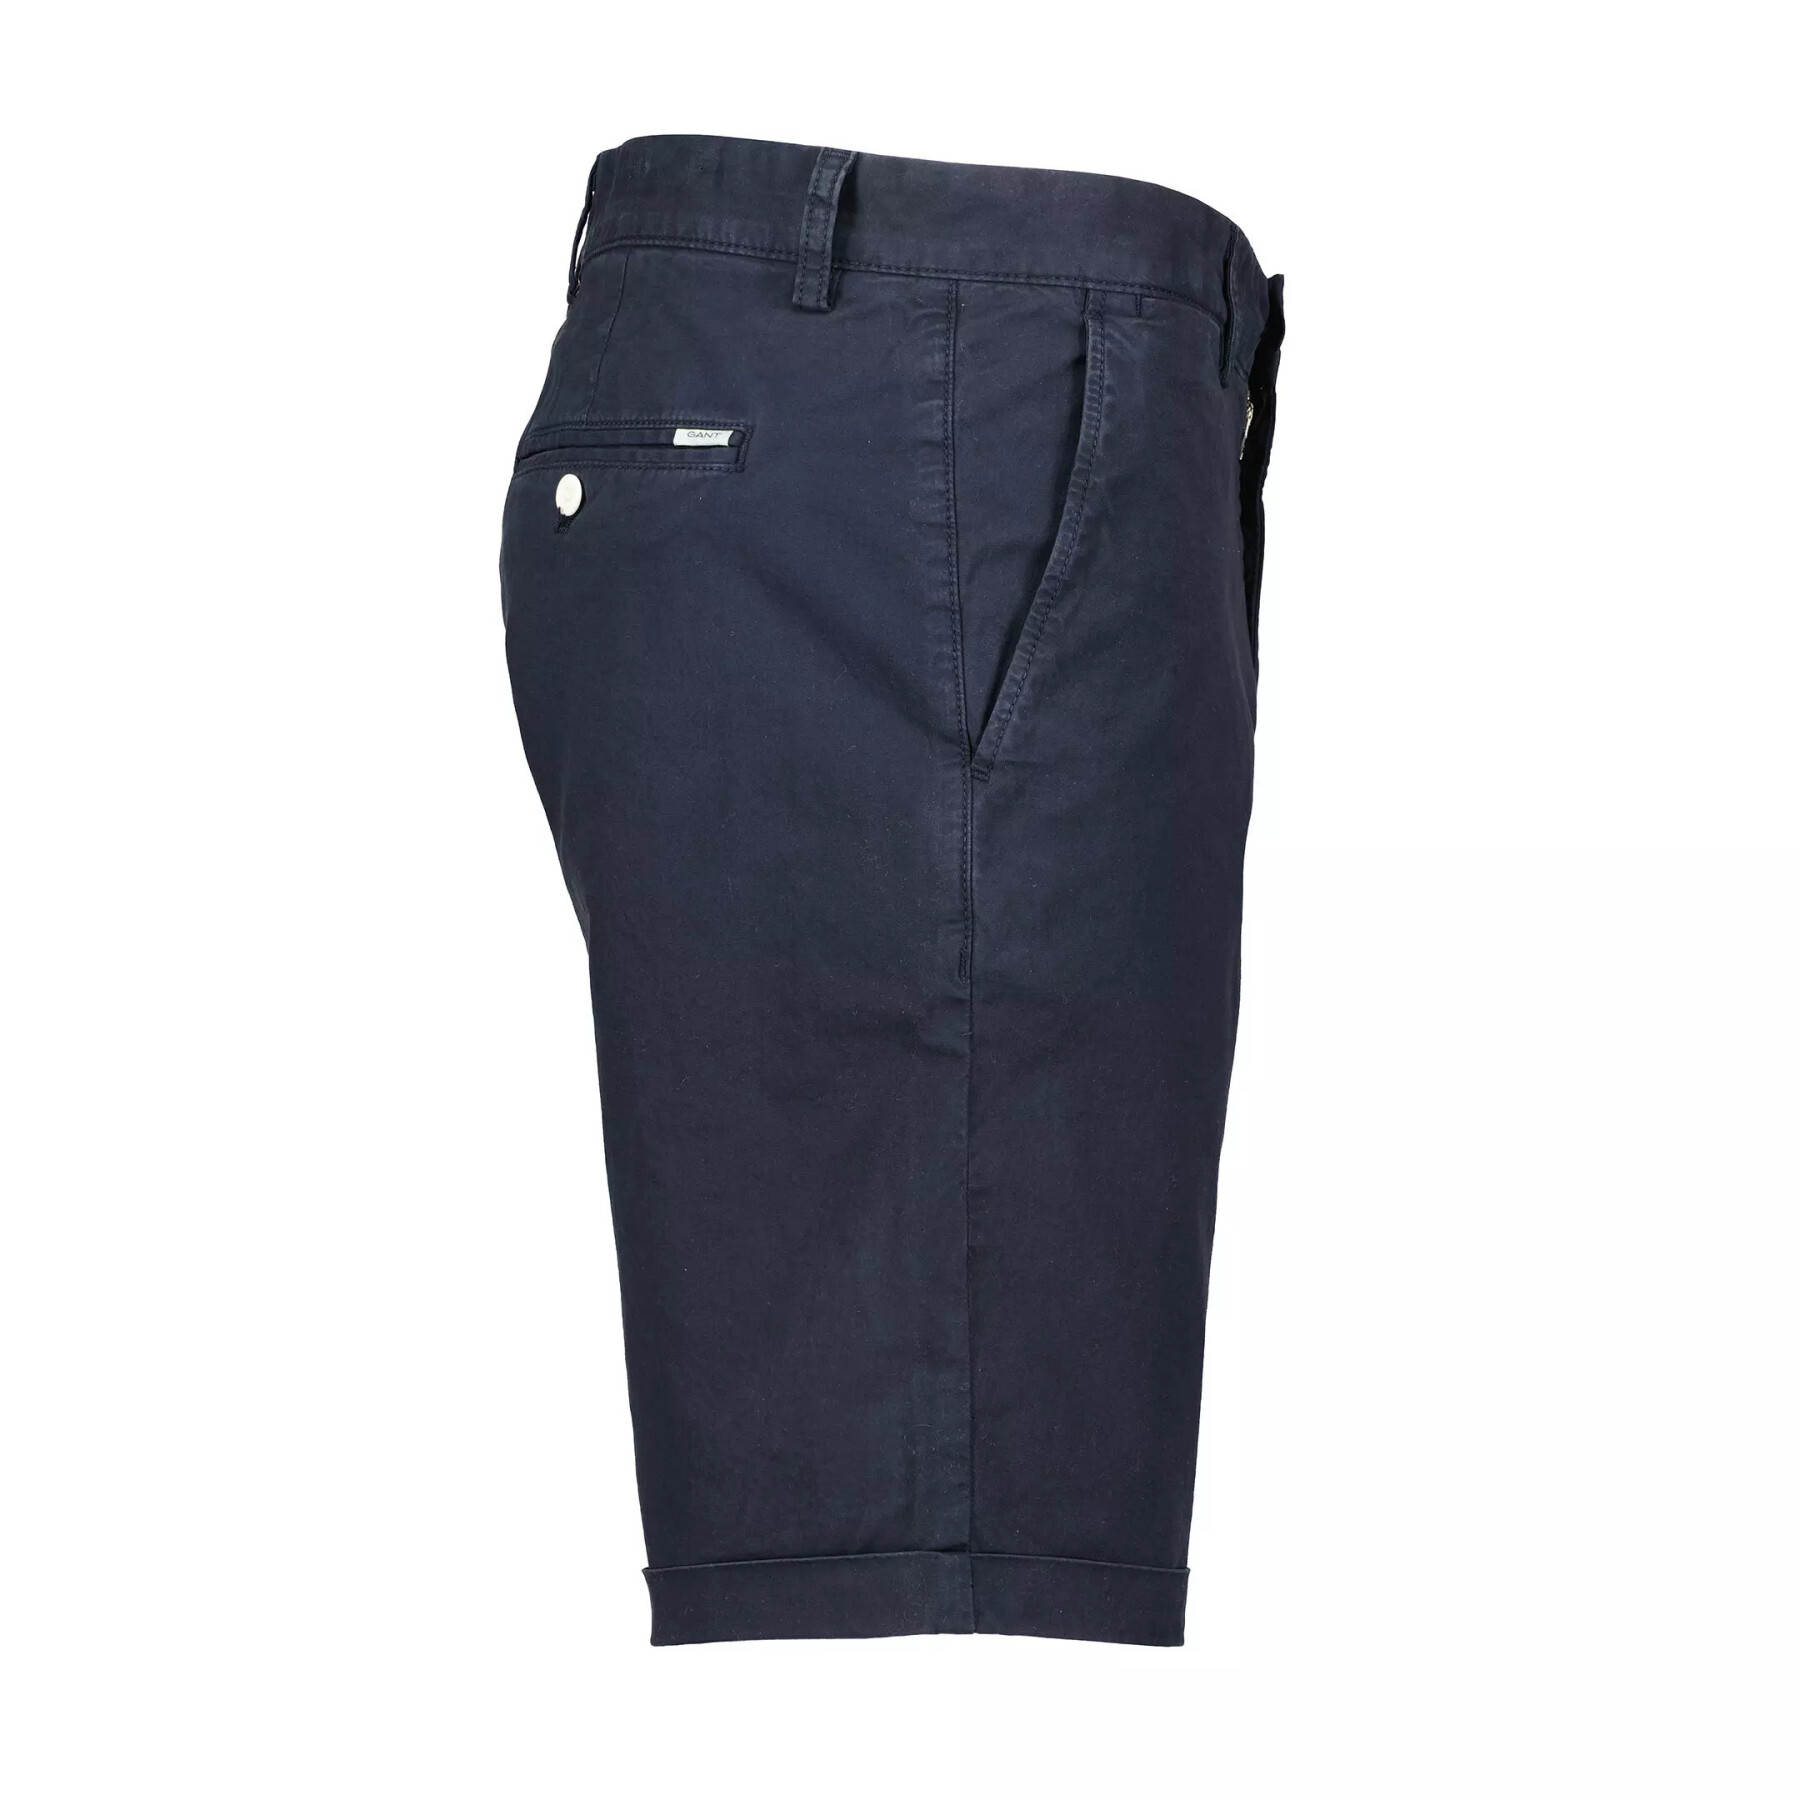 Pantalón corto Gant Reg Sunfaded